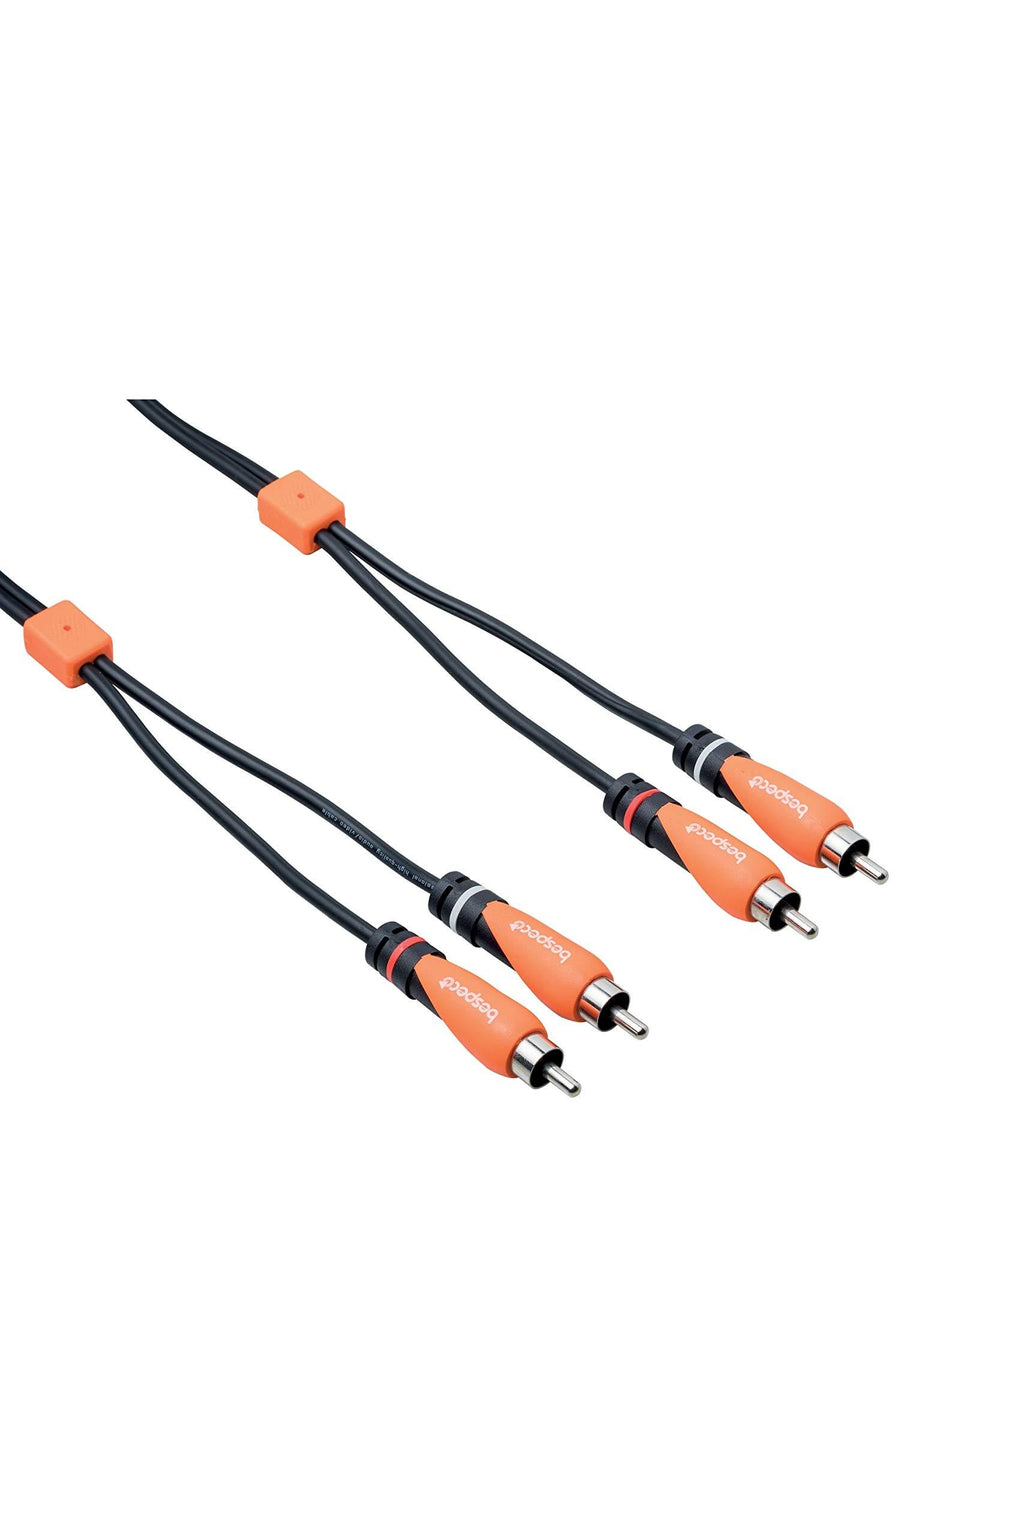 Bespeco Instrument Cable, Black & Orange, 6 foot (SL2R180)